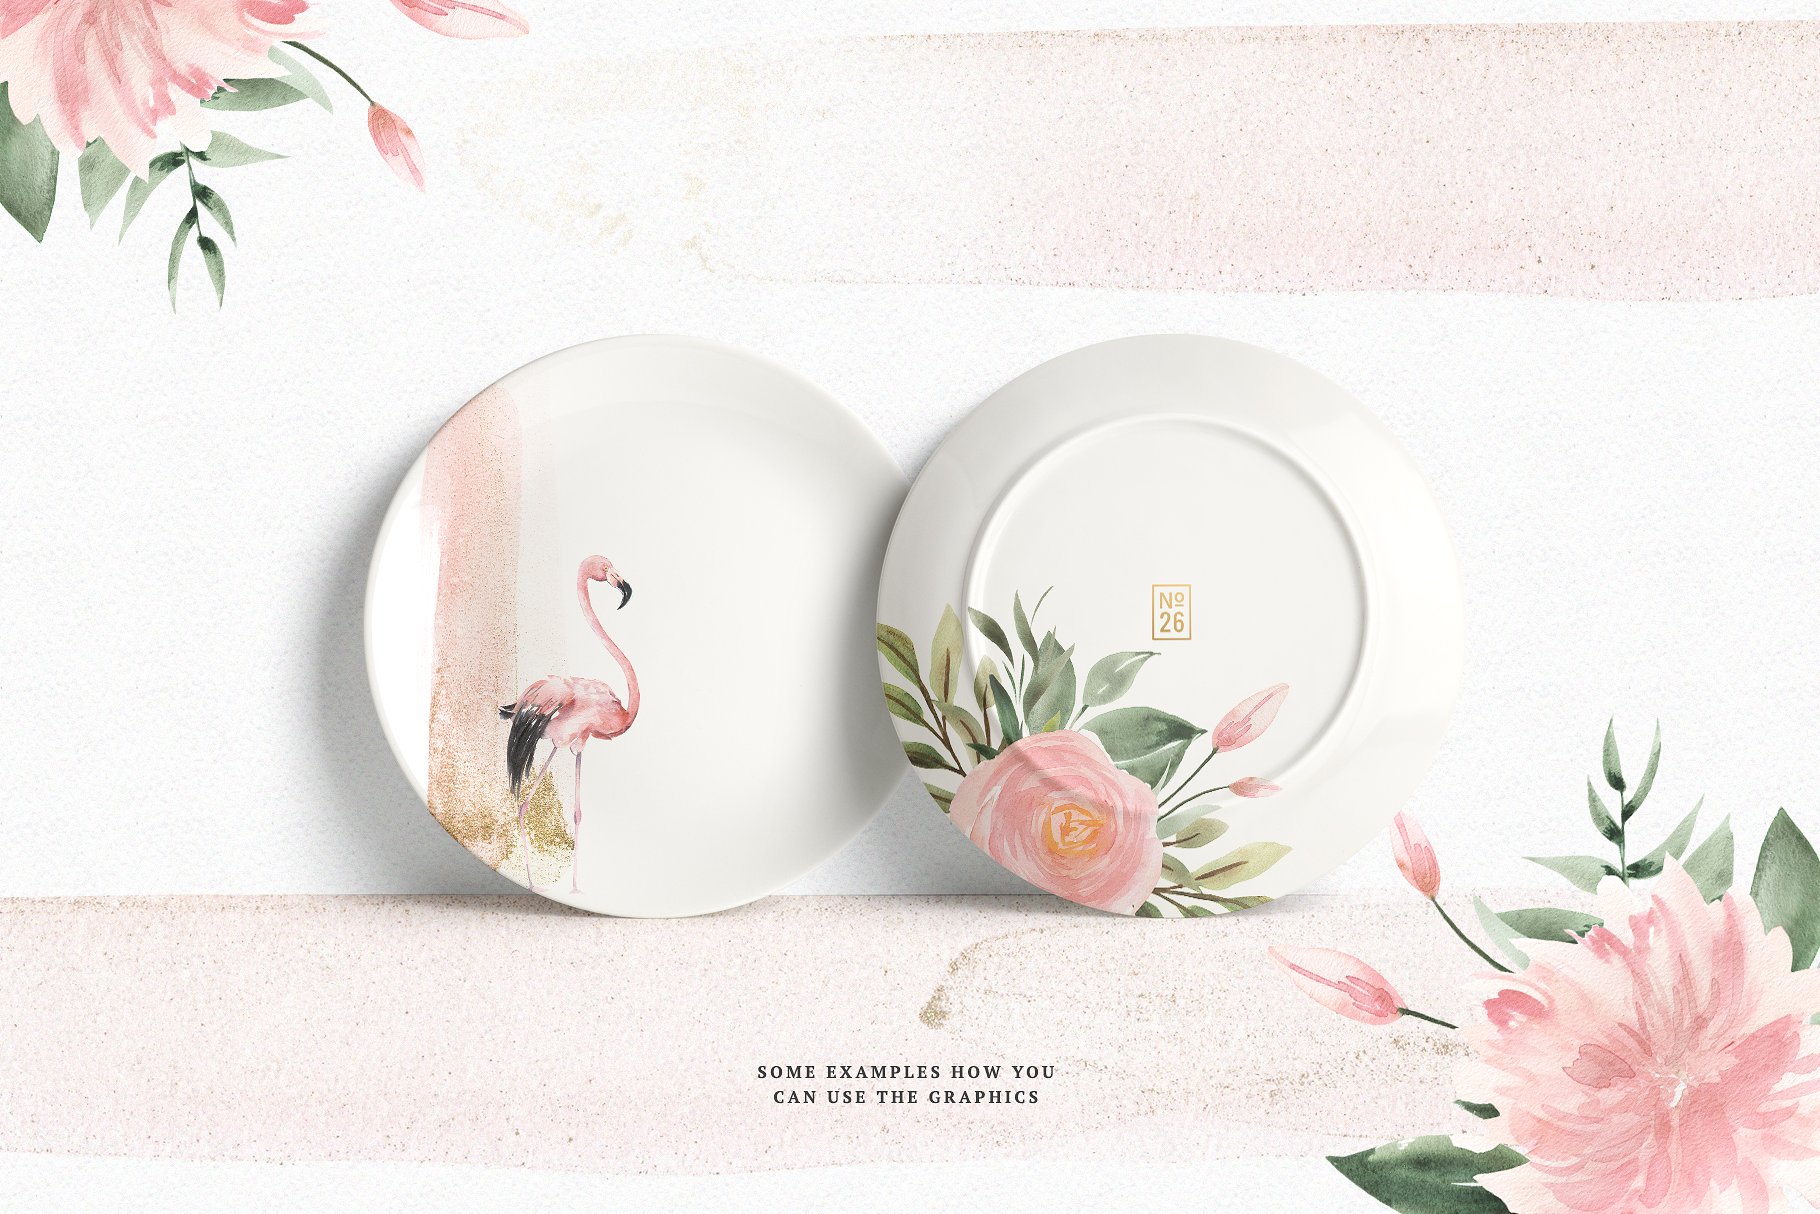 火烈鸟与鲜花矢量水彩插画 Watercolor Flamingo & Flowers插图(11)